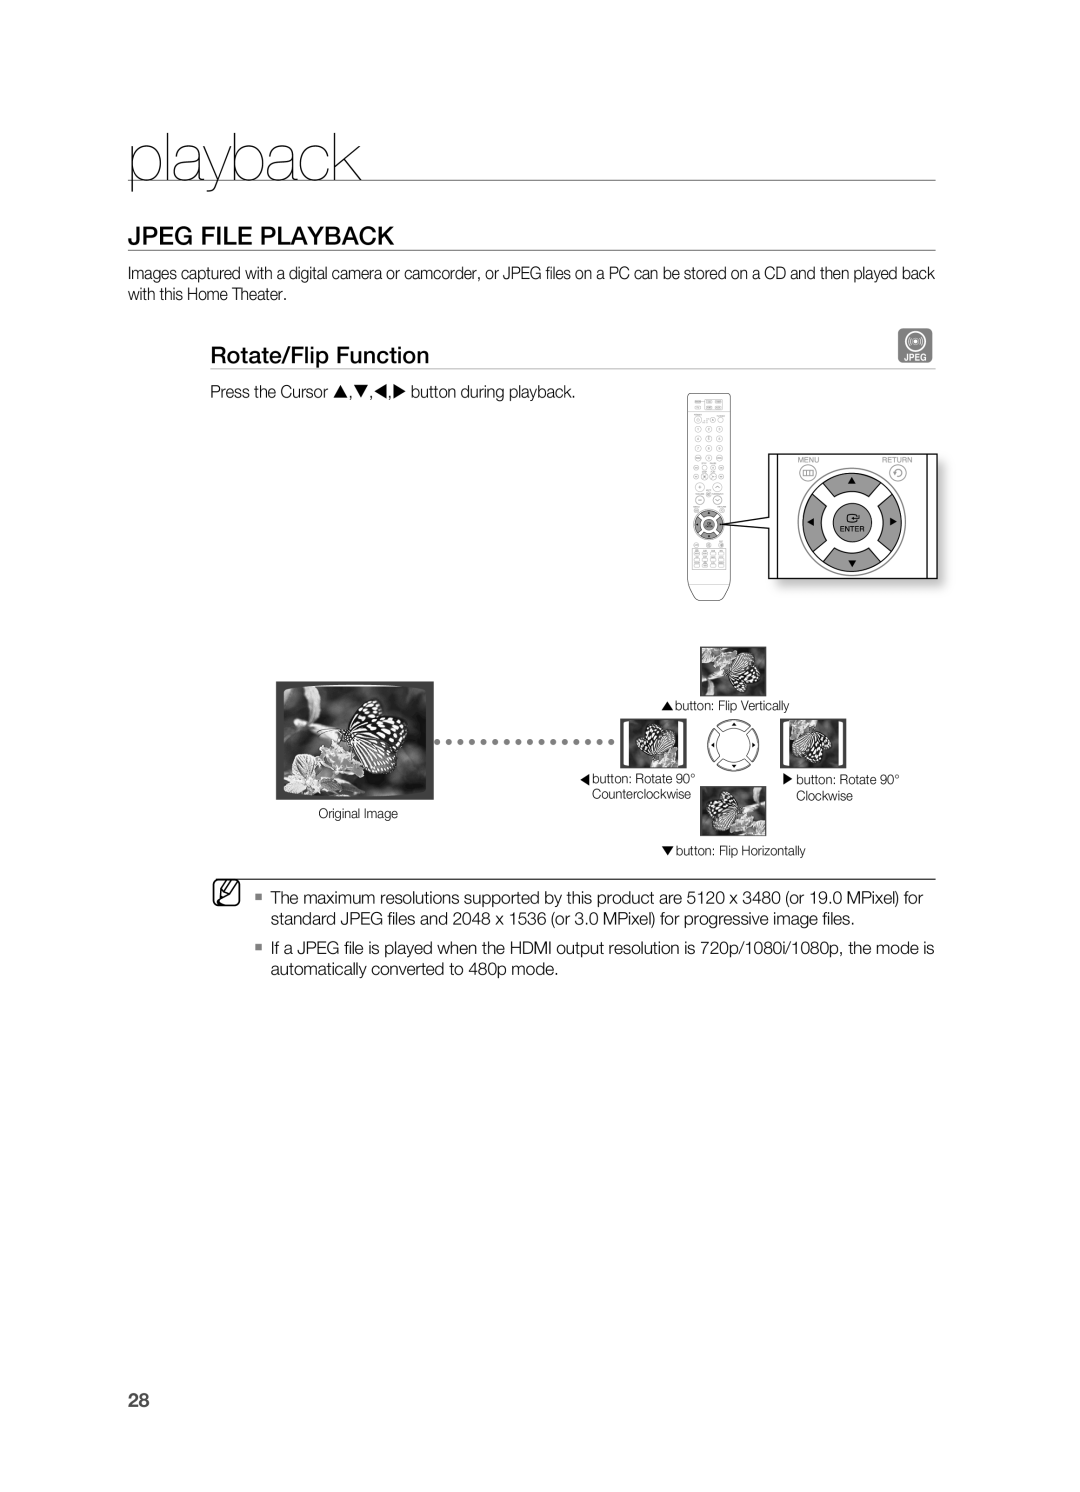 Samsung HT-X810 user manual JPEG FIlE PlAYBACK, rotate/Flip Function, playback 